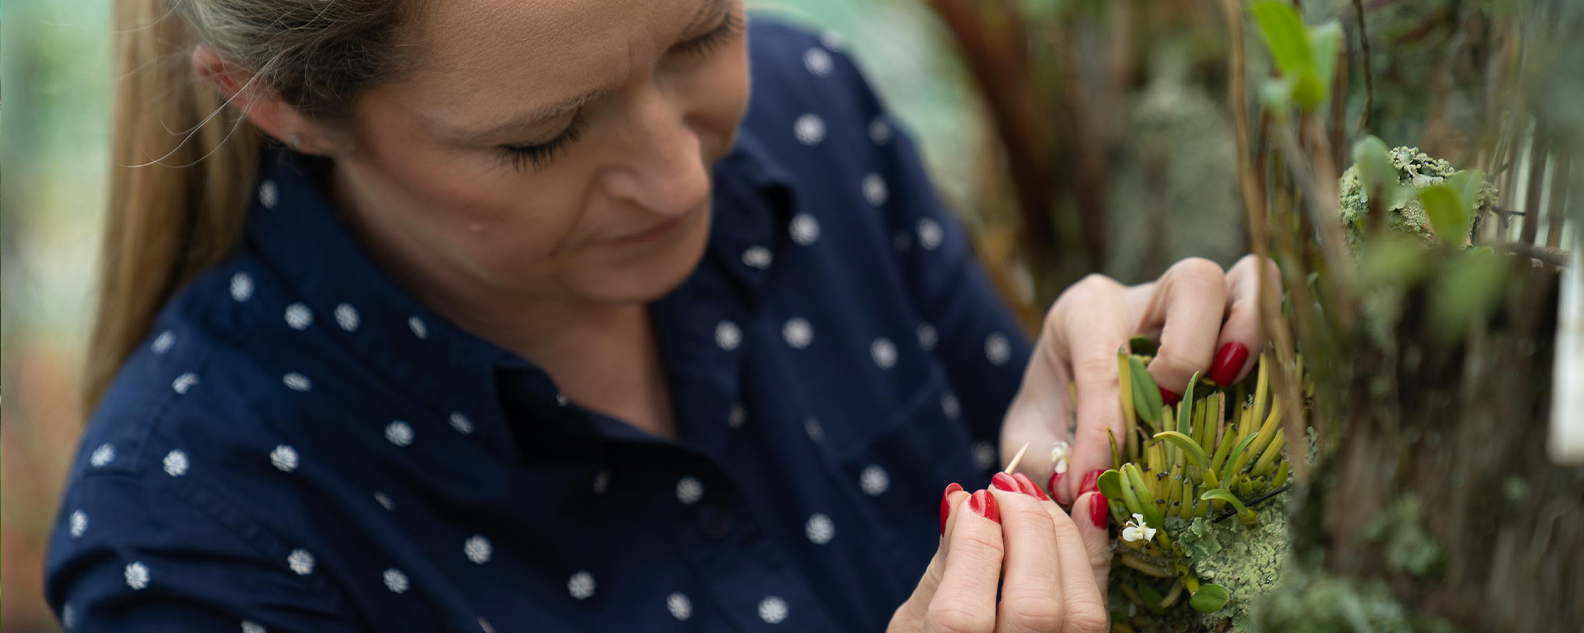 Scientist Zoe Joy Newby examines an orchid flower